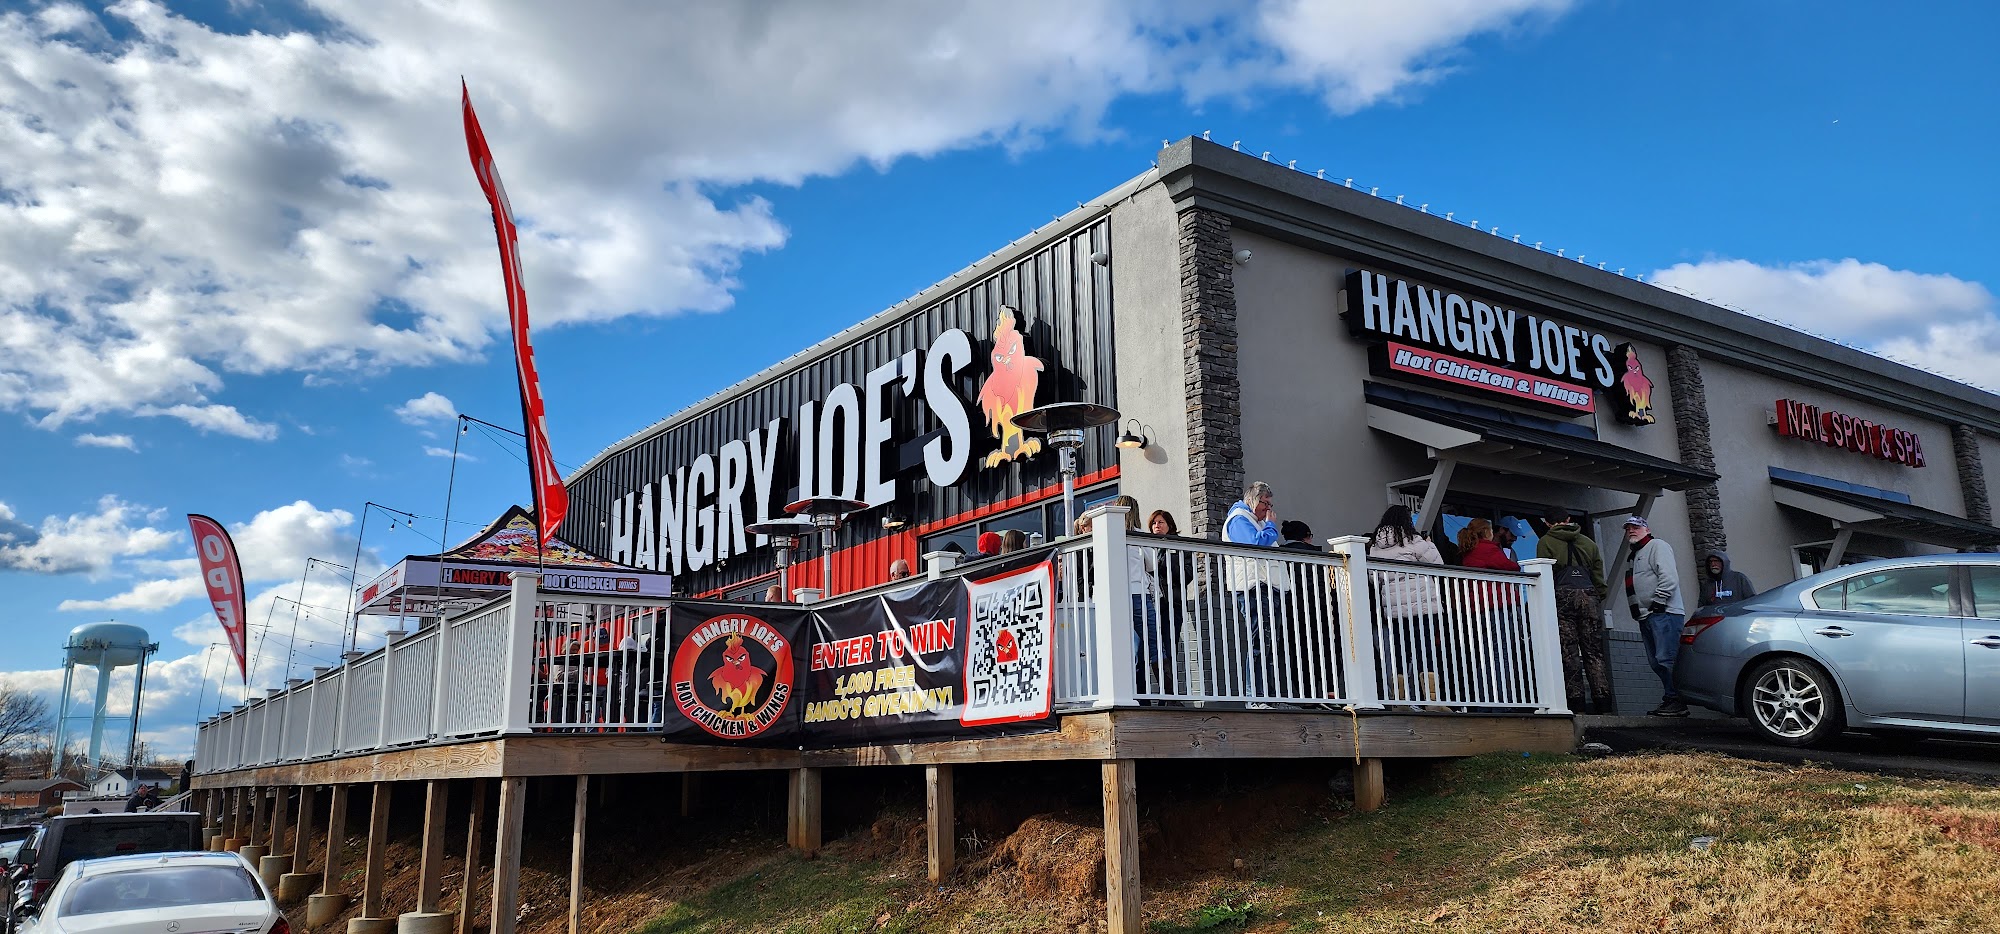 Hangry Joe's Lynchburg Hot Chicken